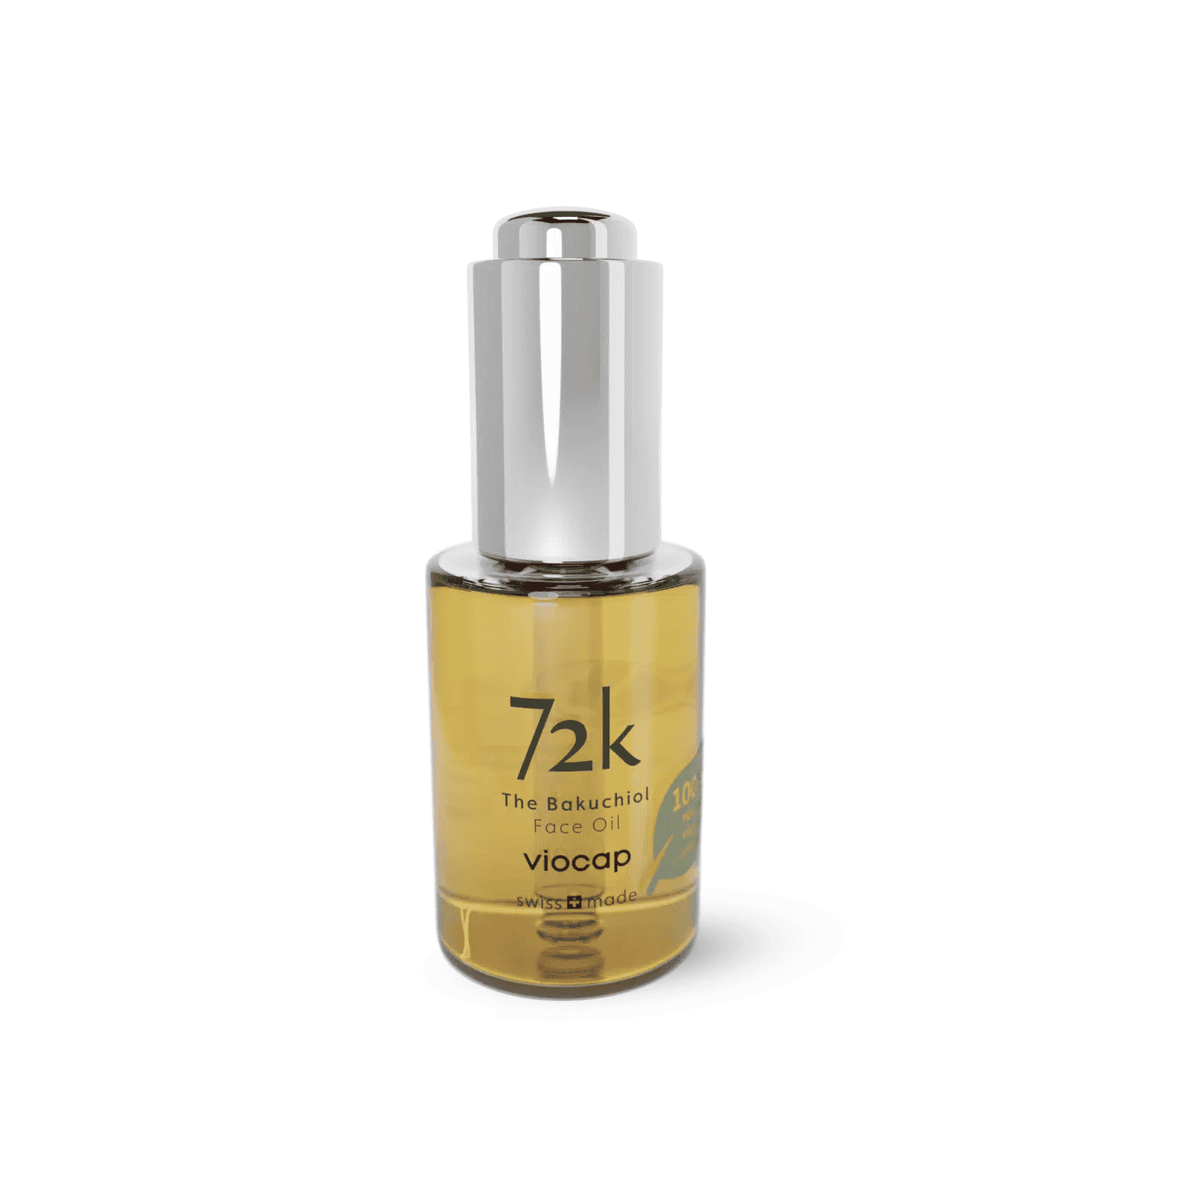 72K The Bakuchiol Face Oil for woman 瑞士補骨脂酚面精油 30ML